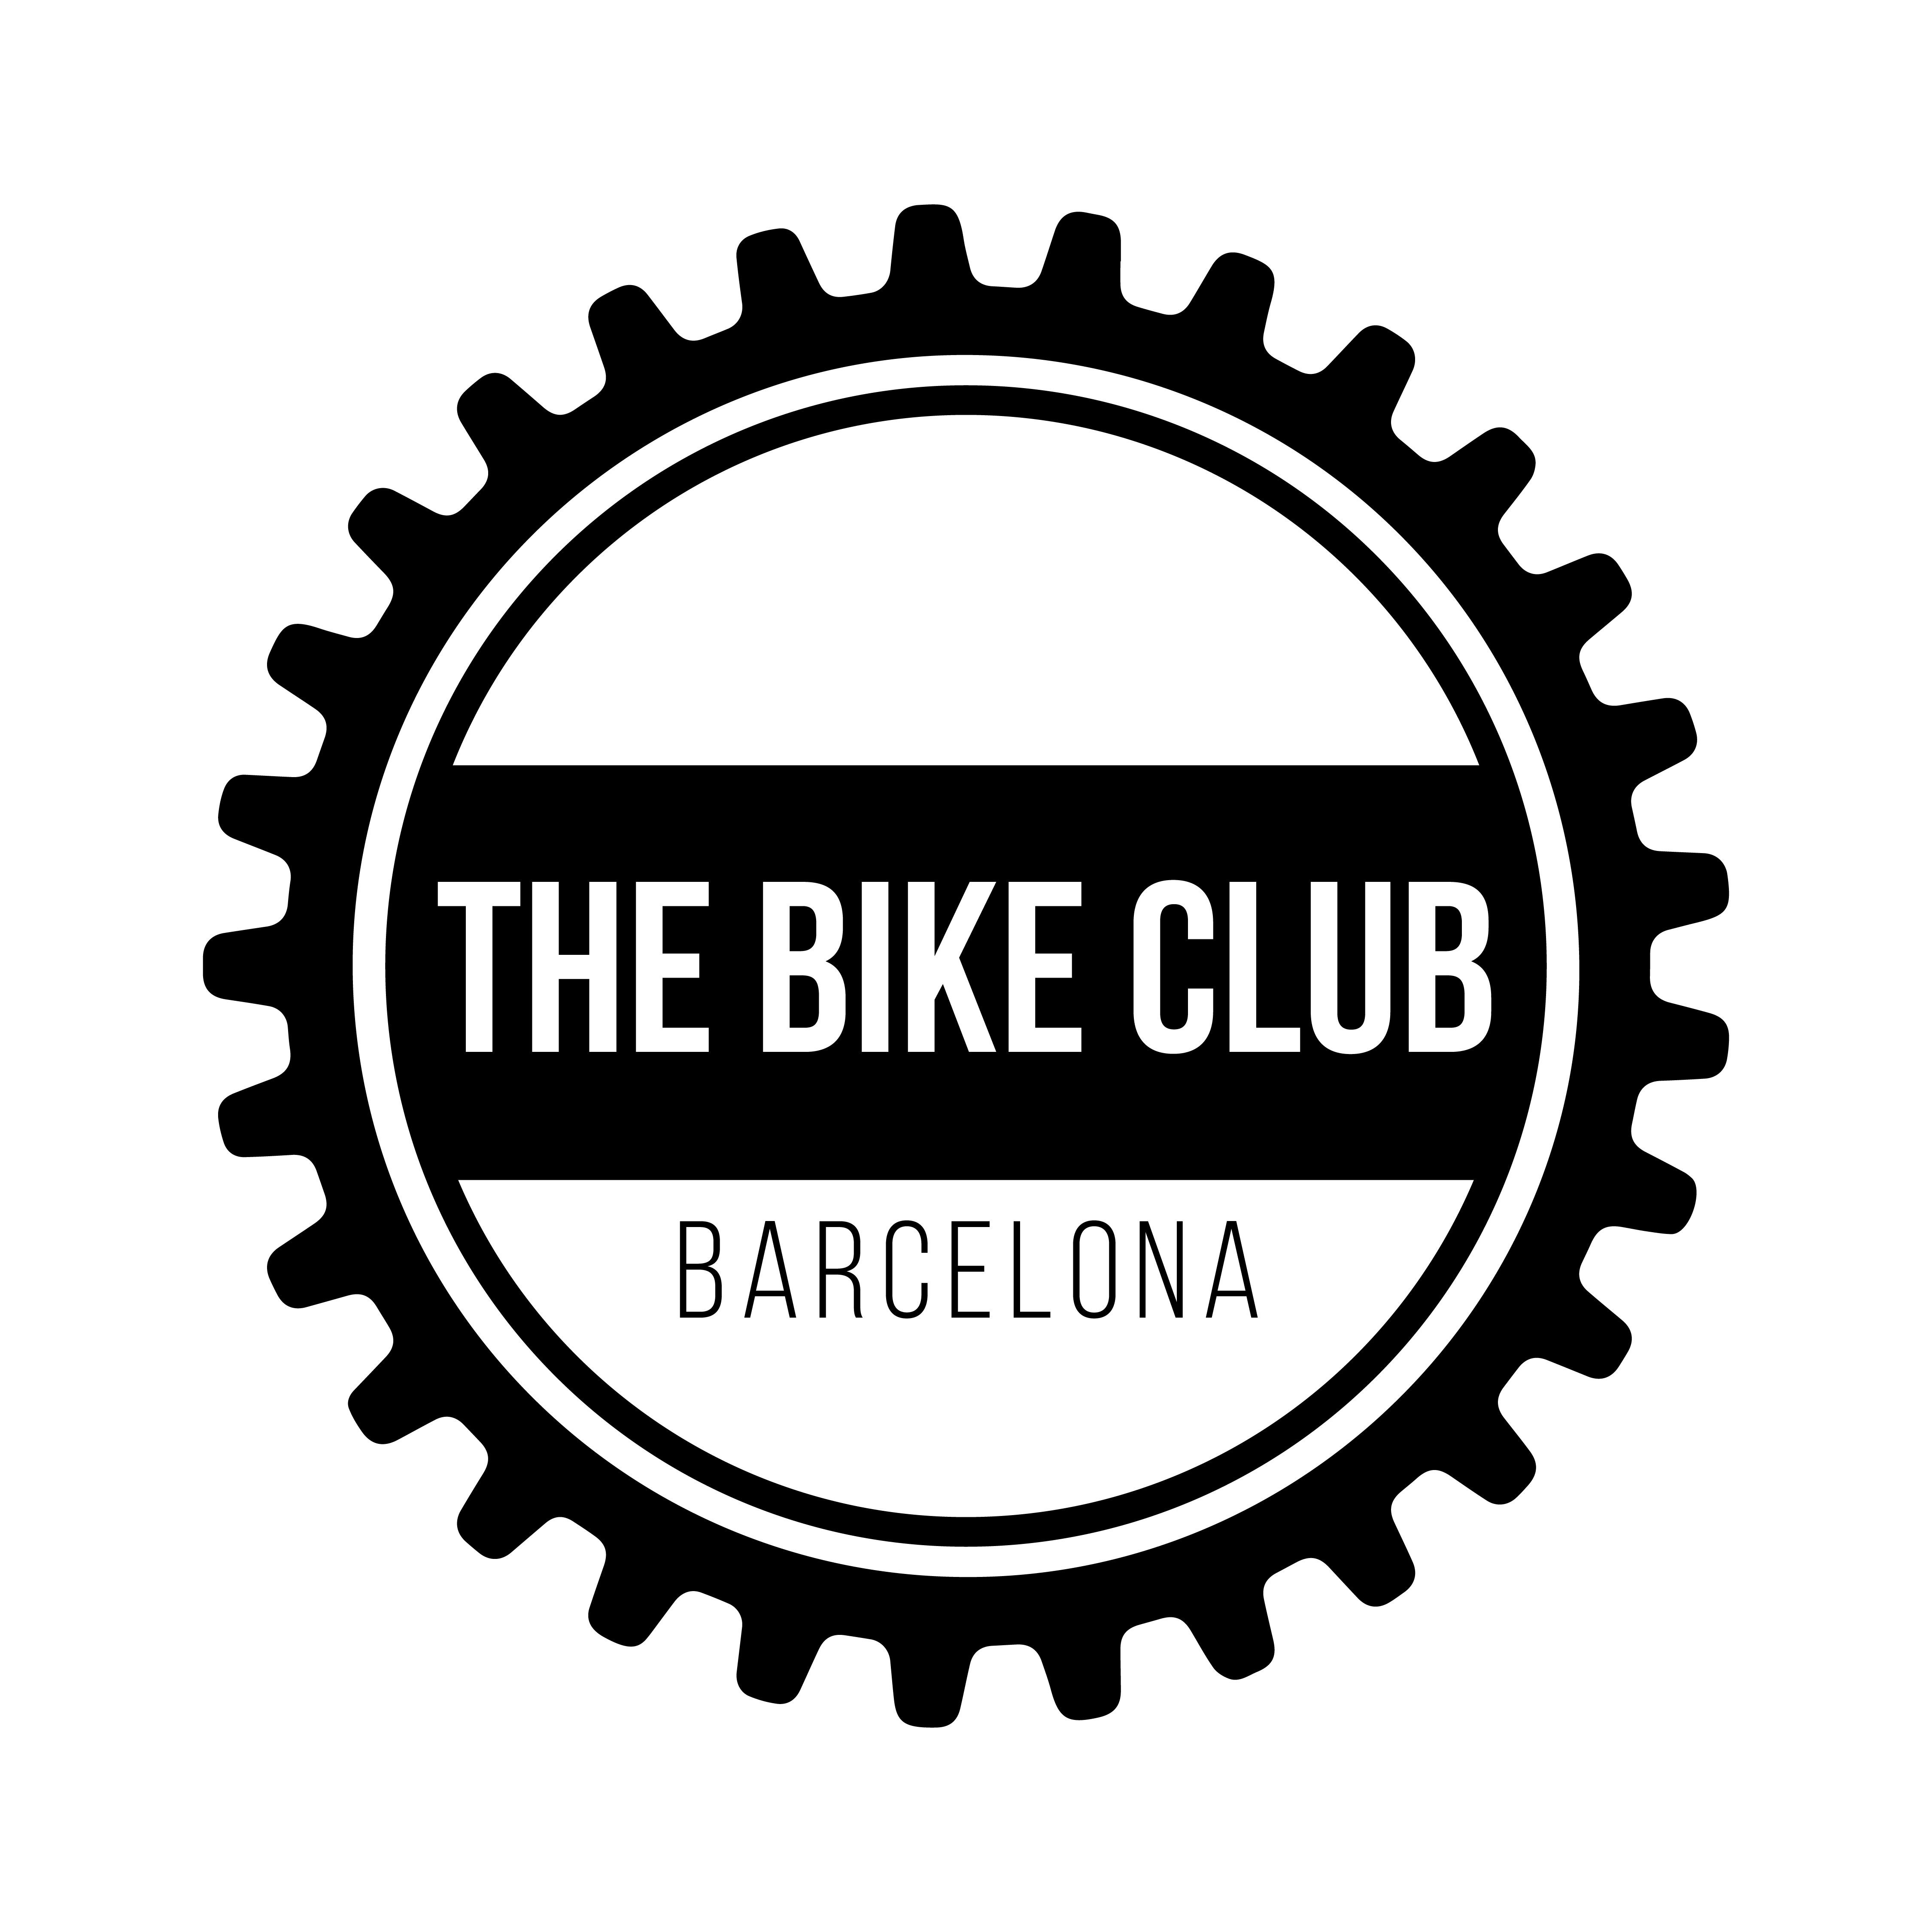 The Bike Club Barcelona - is using www.repero.me, a repair shop software